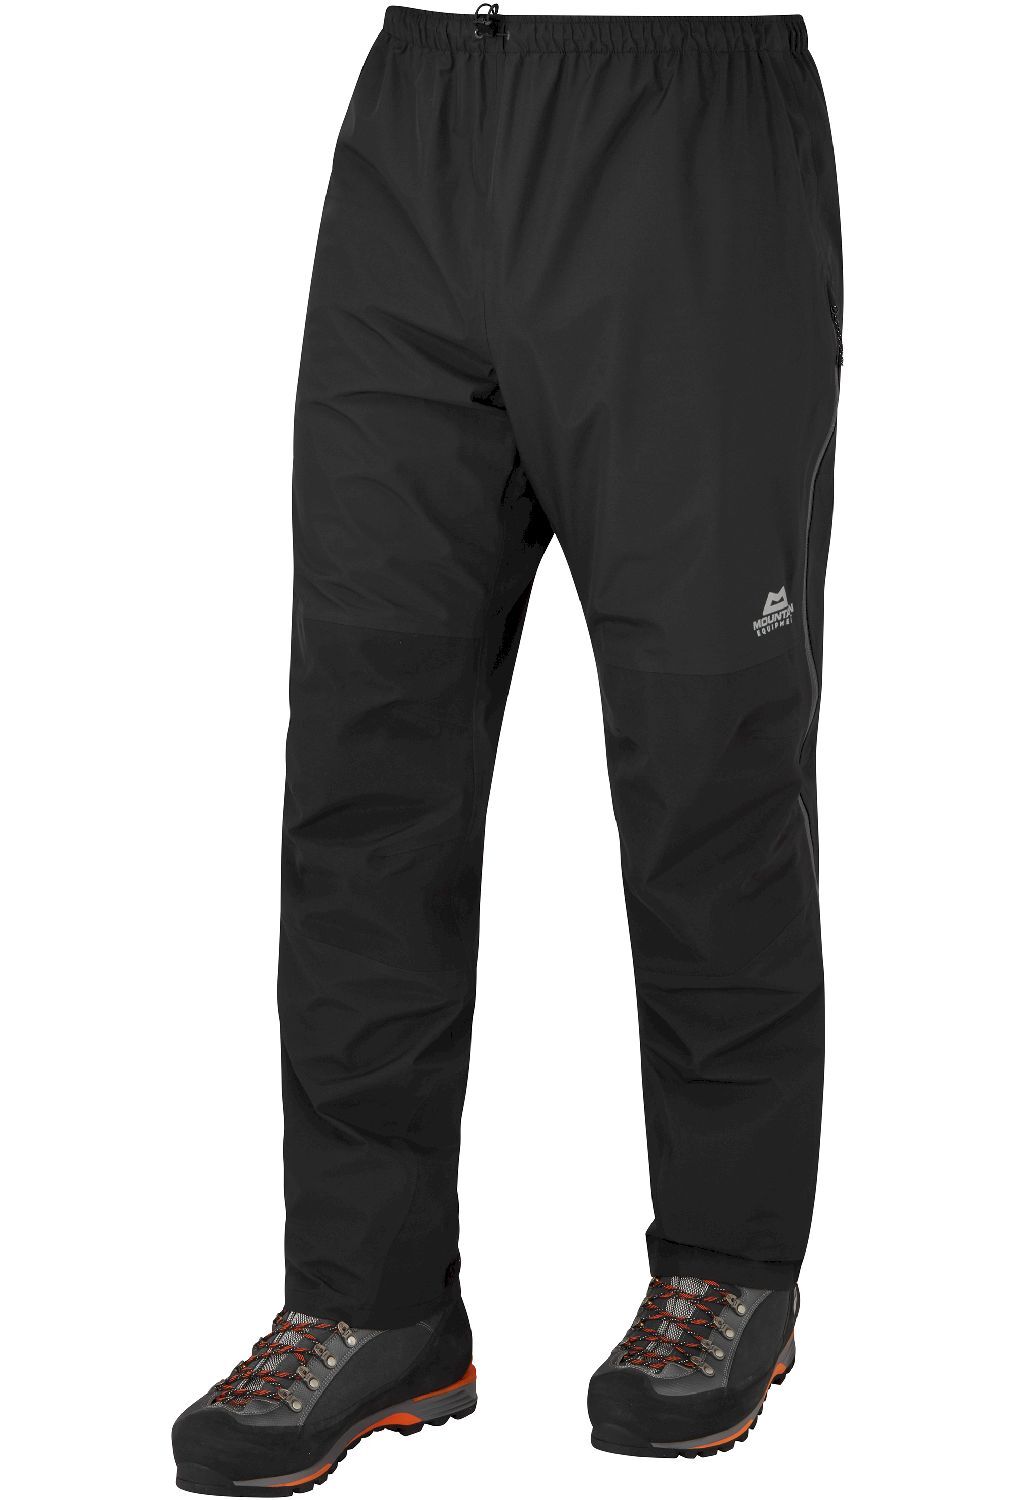 Mountain Equipment Saltoro Pant - Hardshell pants - Men's